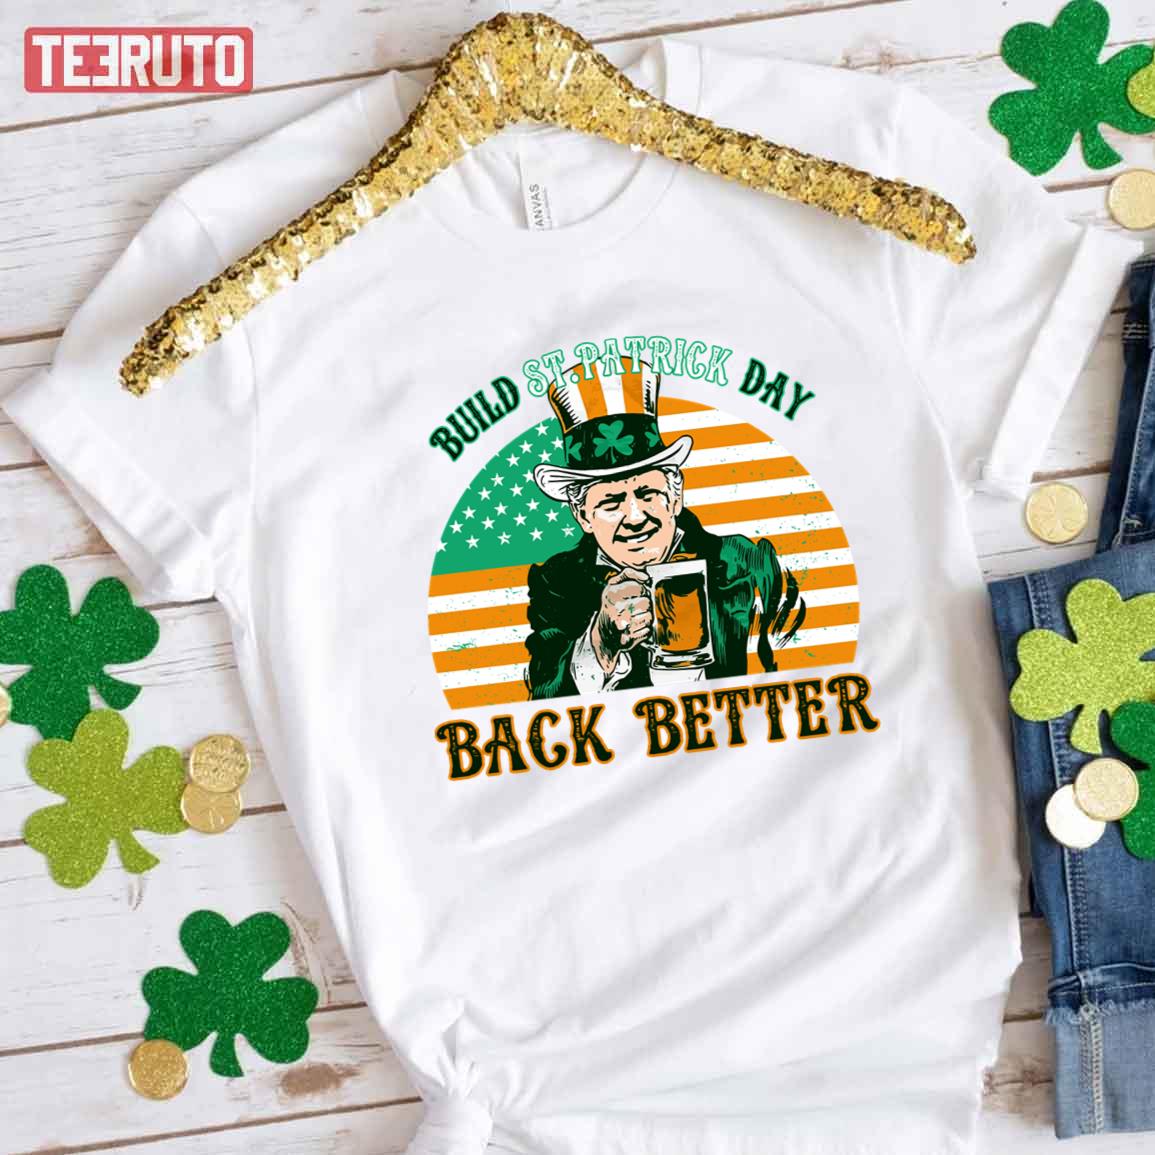 Build St.Patrick Day Back Better Vintage Unisex T-Shirt